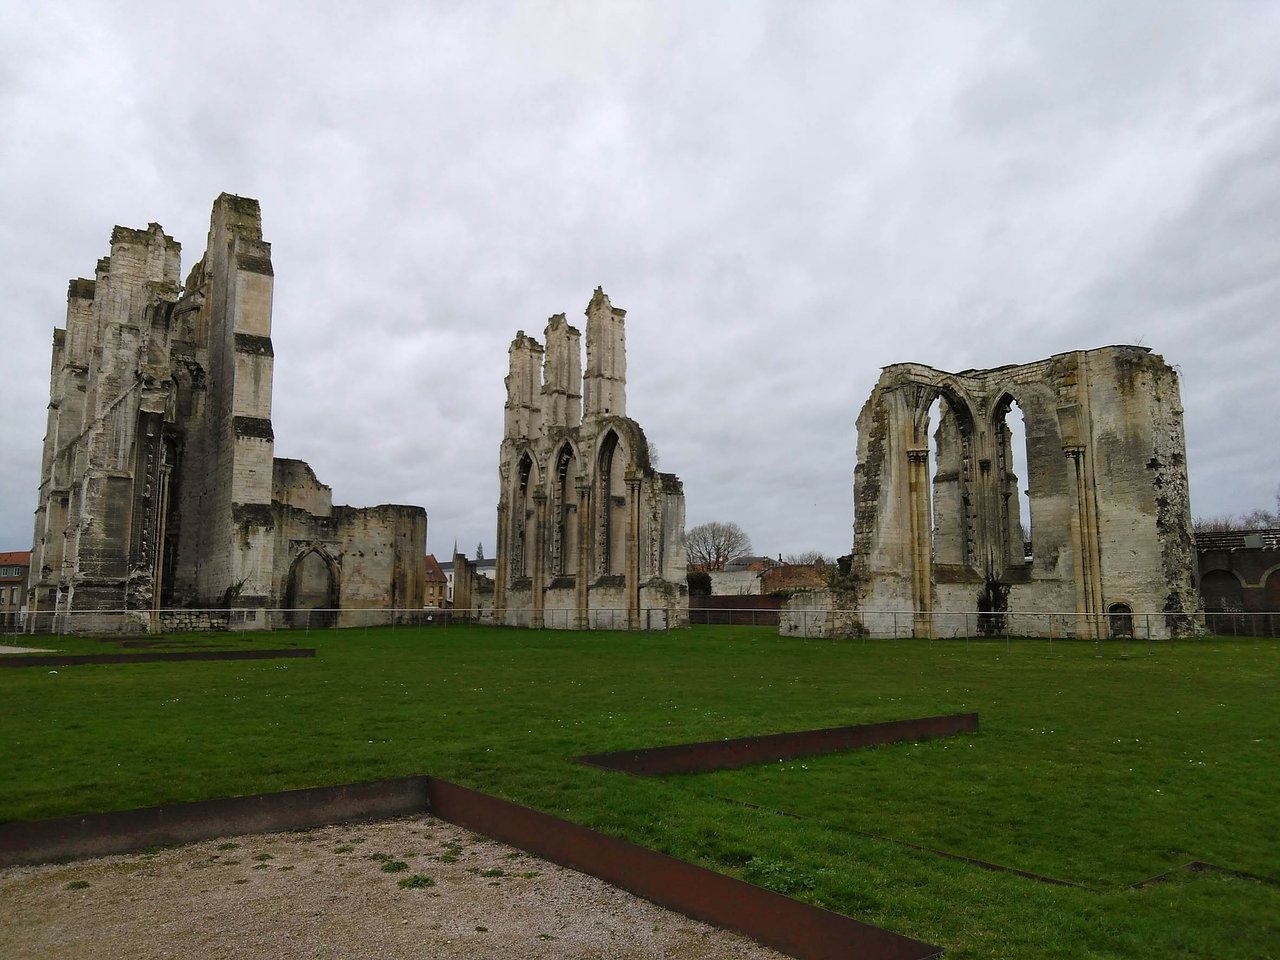 Tante De Jardin Beau Ruines De L Abbaye Notre Dame De Clairmarais 2020 All You